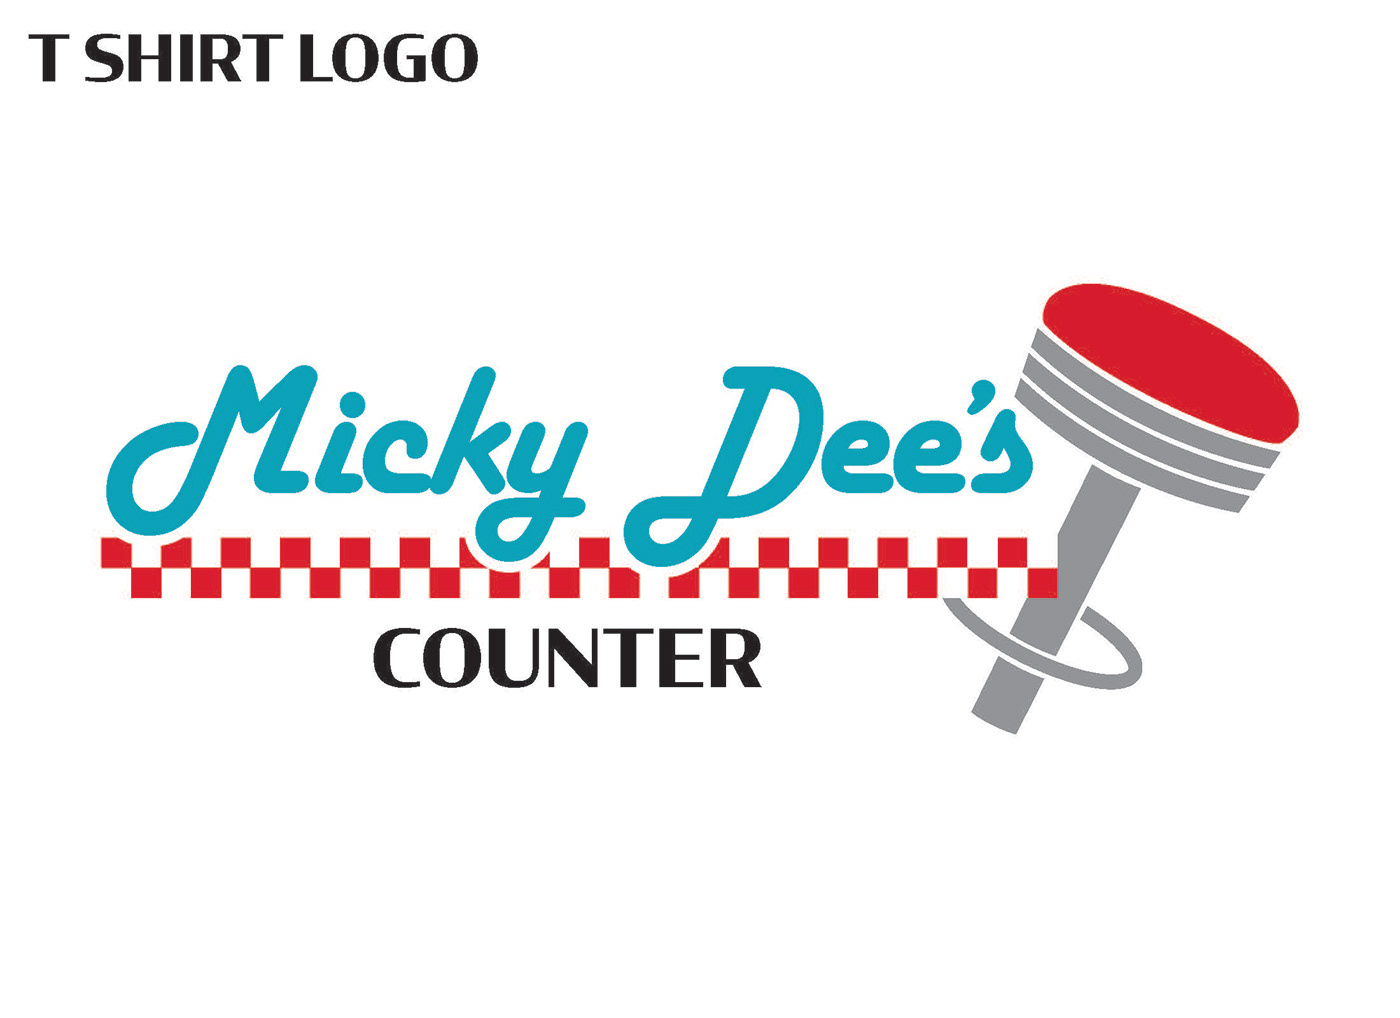 restaurant Logo Design Illustrator photoshop Mockup Retro diner menu brand identity